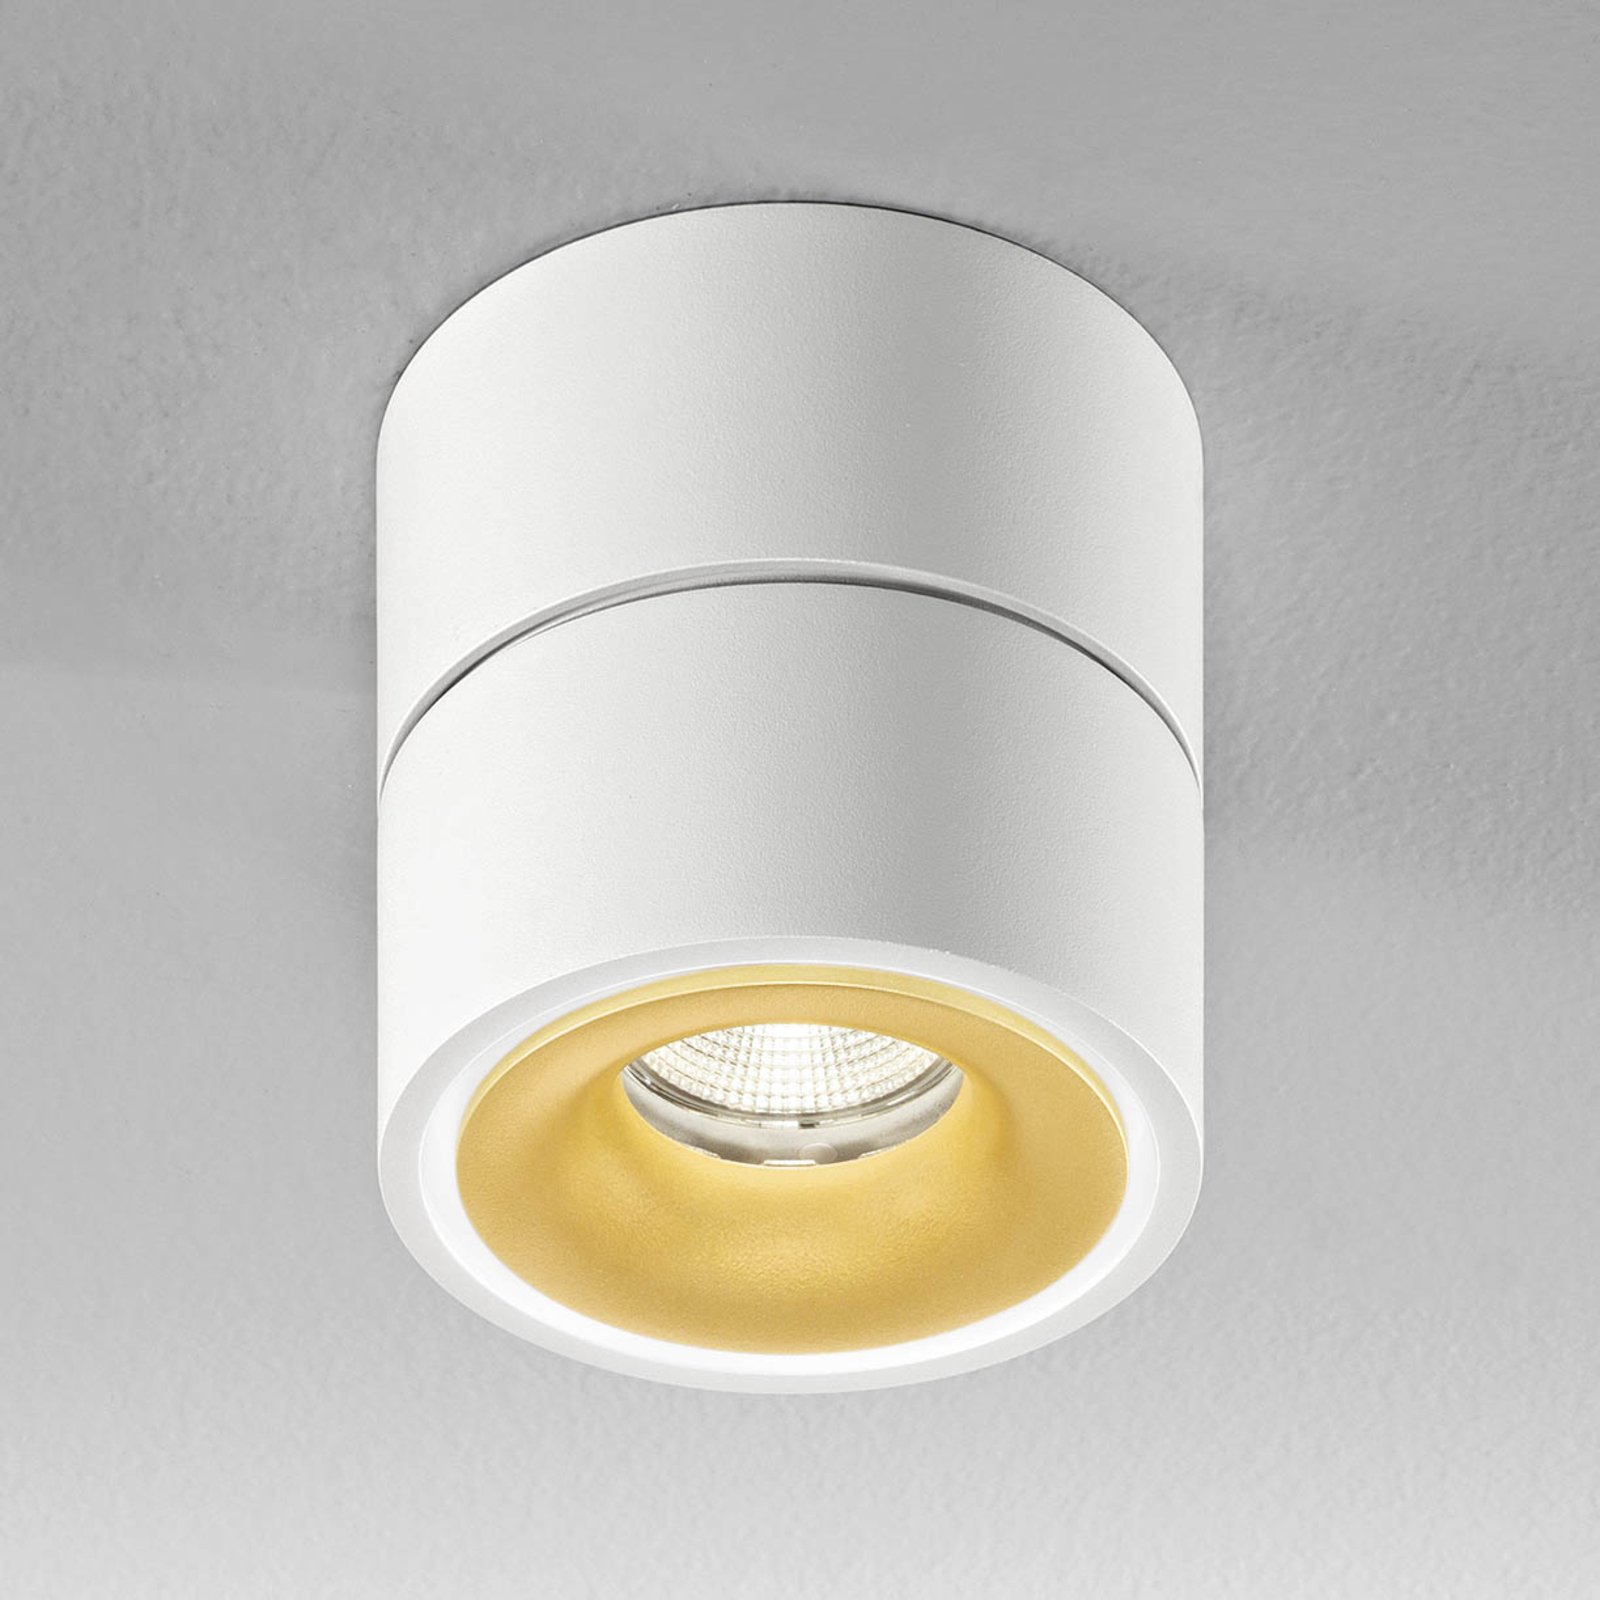 Egger Clippo S LED mennyezeti spot, fehér-arany